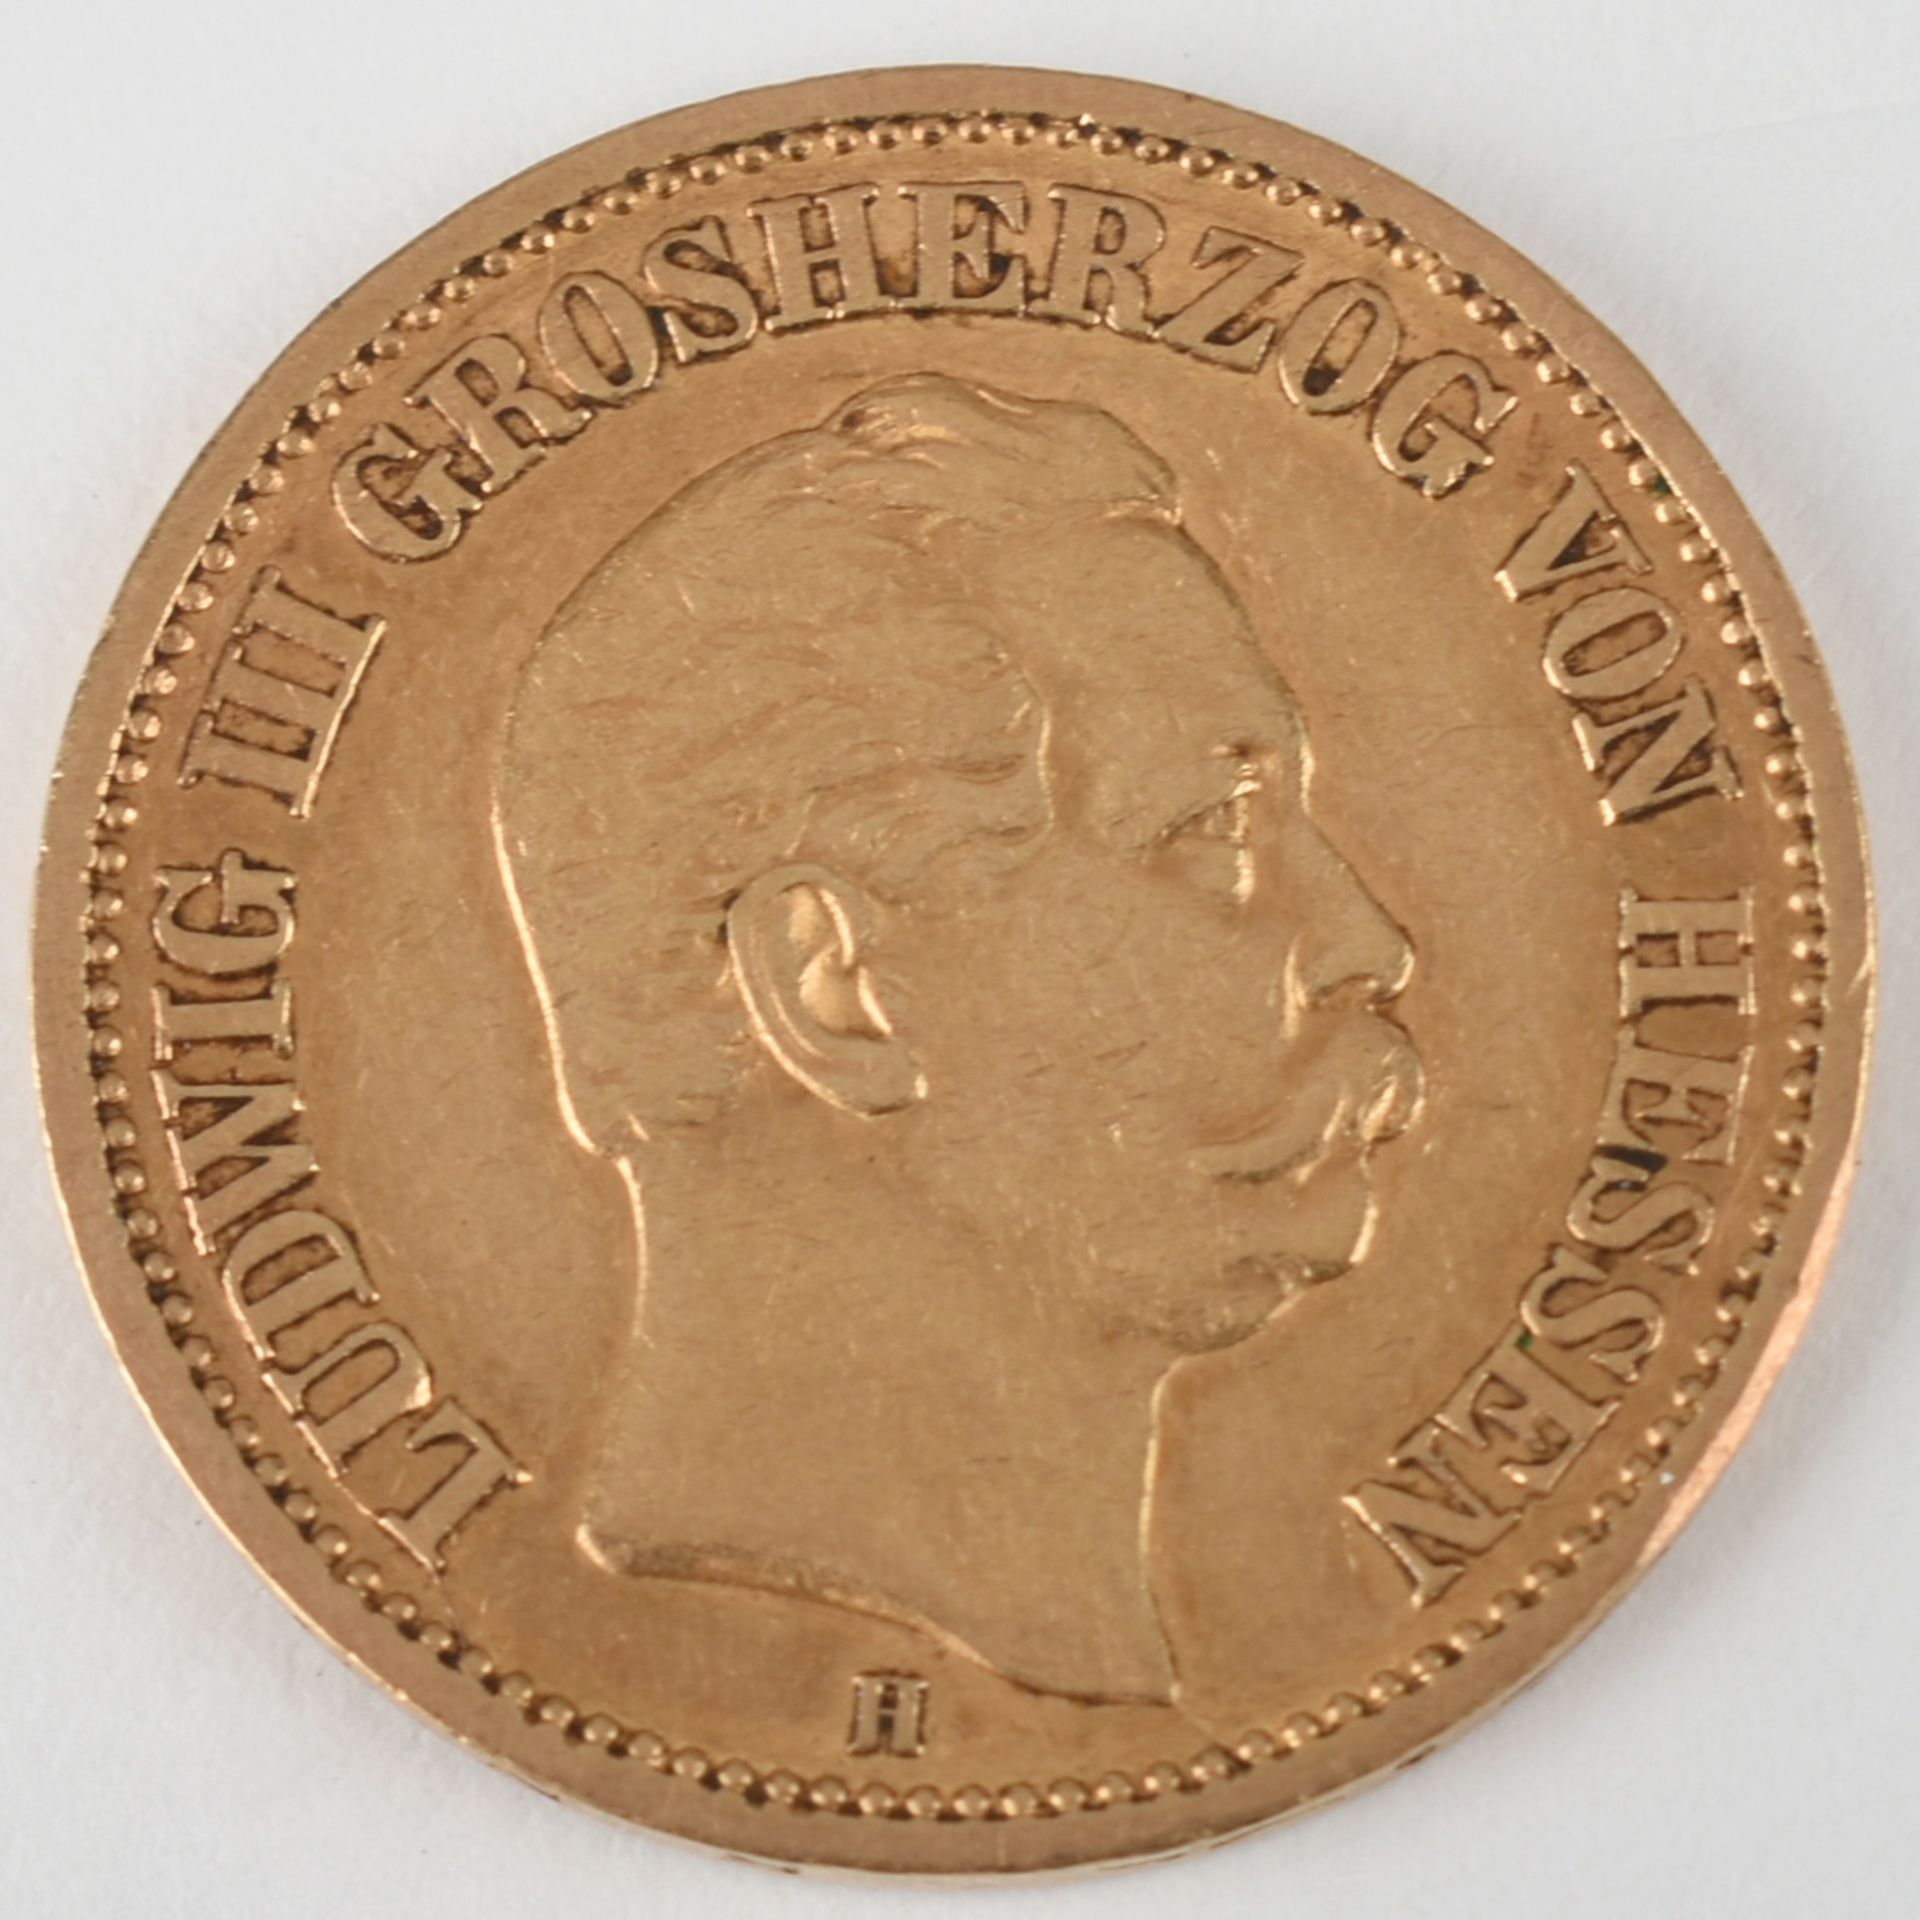 Goldmünze Kaiserreich - Hessen 1873 20 Mark in Gold, 900/1000, 7,96 g, D ca. 22,5 mm, av. Ludwig III - Image 2 of 3